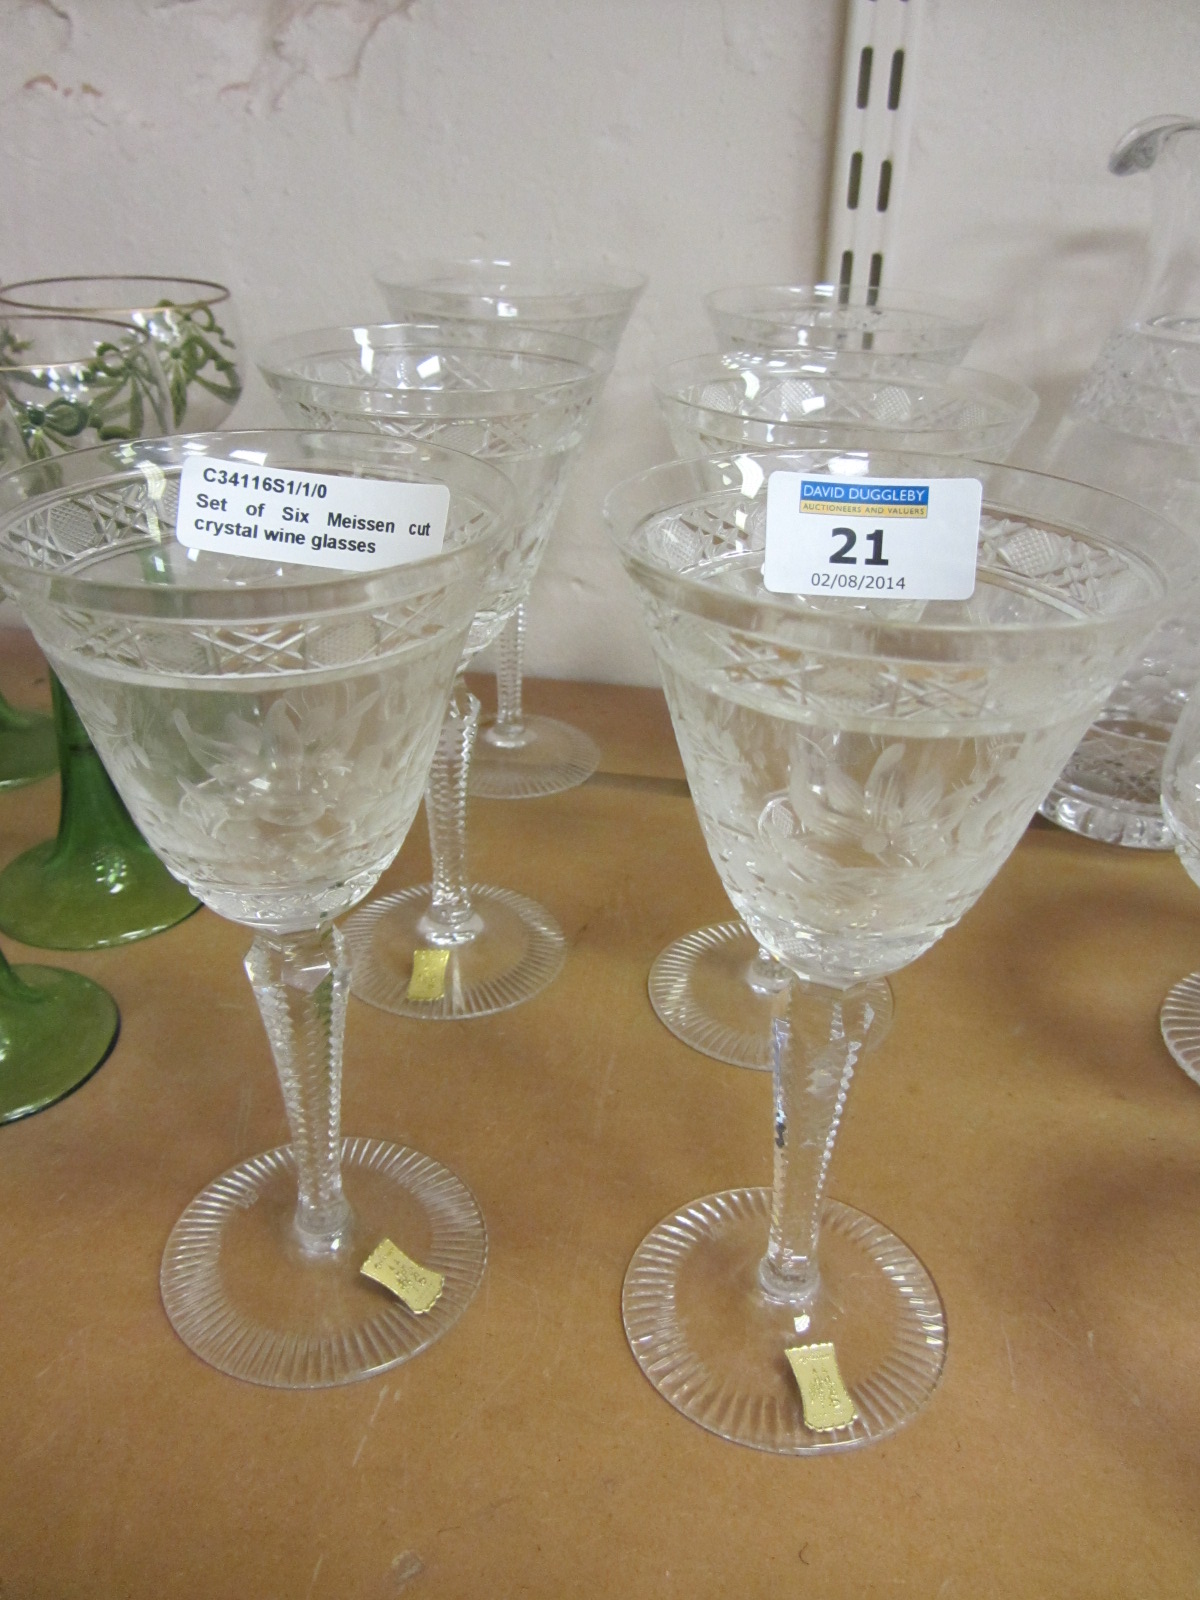 Set of Six Meissen cut crystal wine glasses